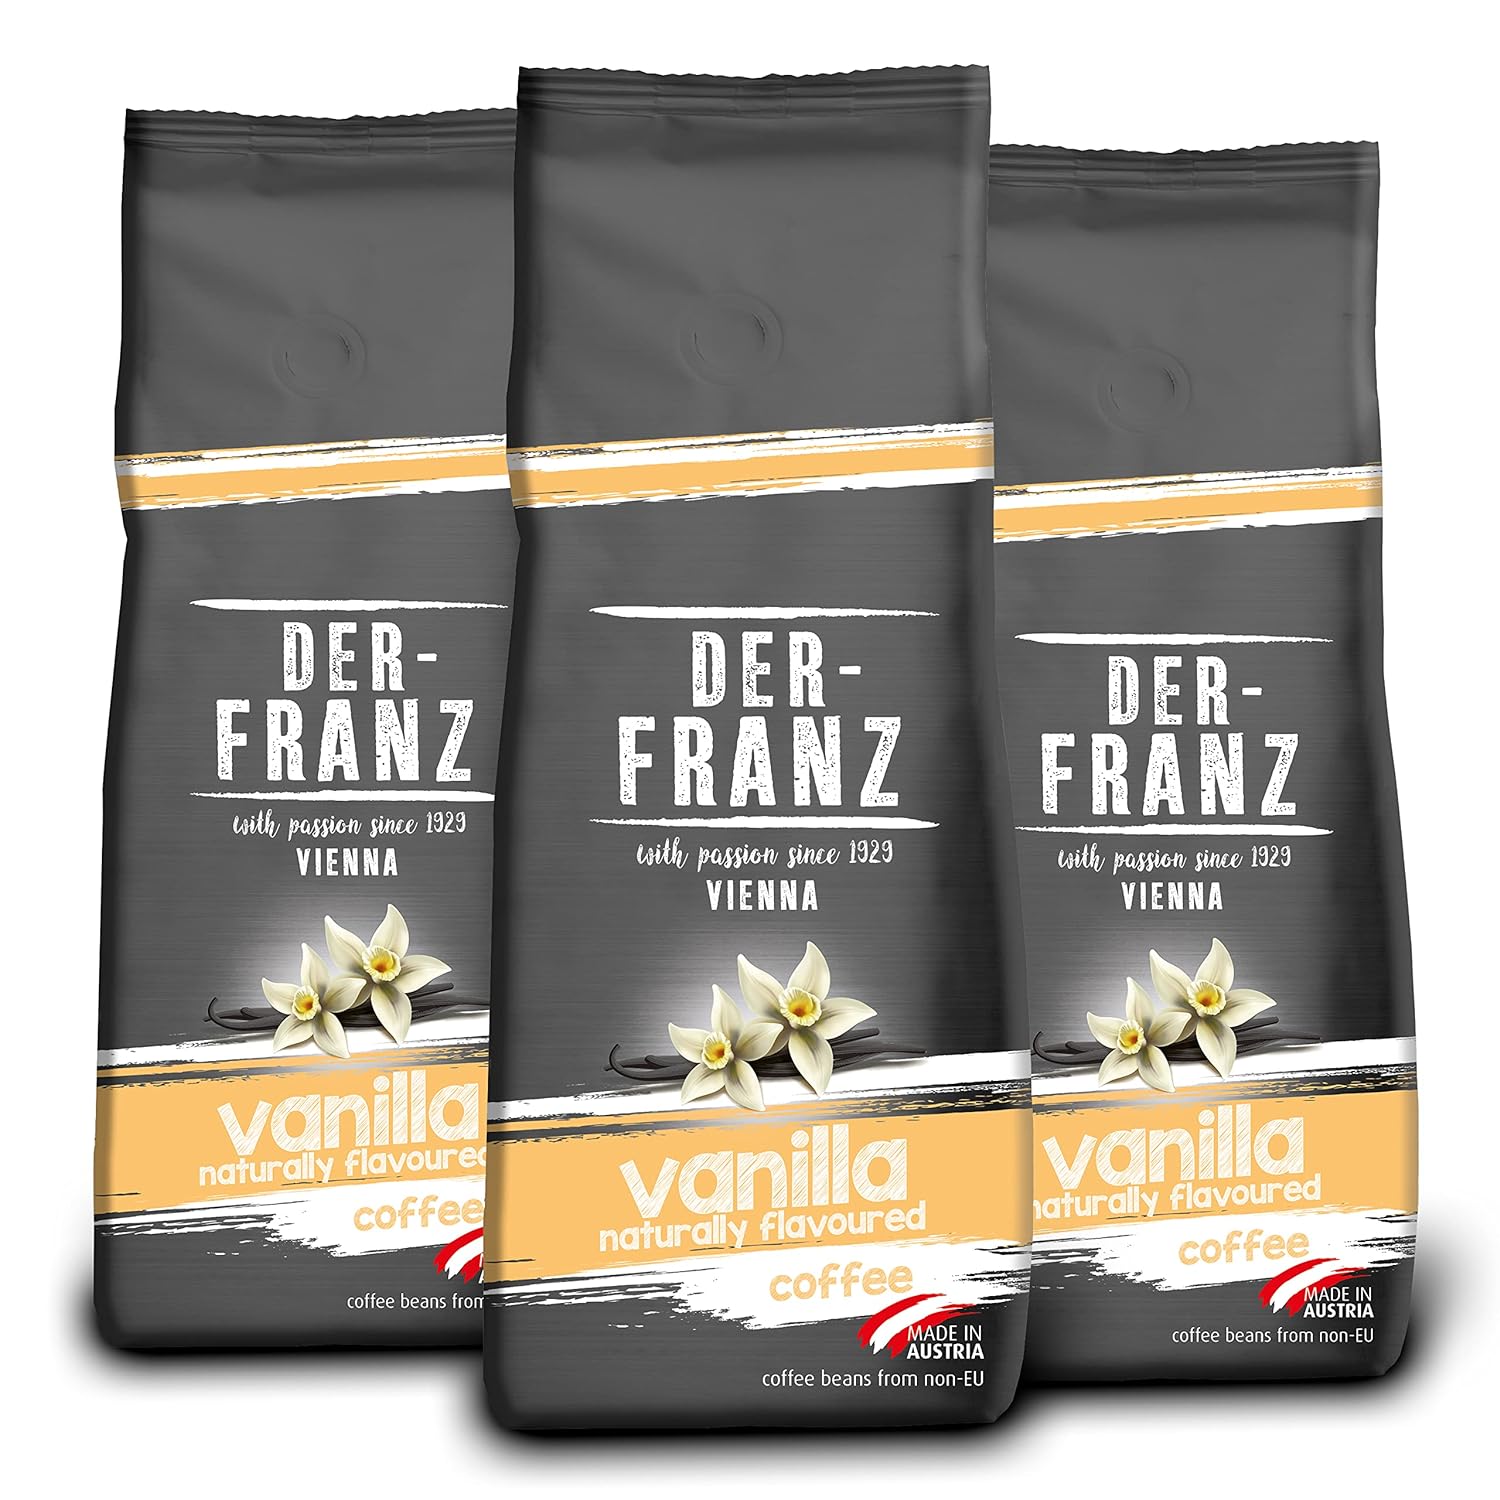 Der-Franz Coffee, Flavored with Vanilla, Arabica and Robusta Coffee Beans, 3 x 500 g